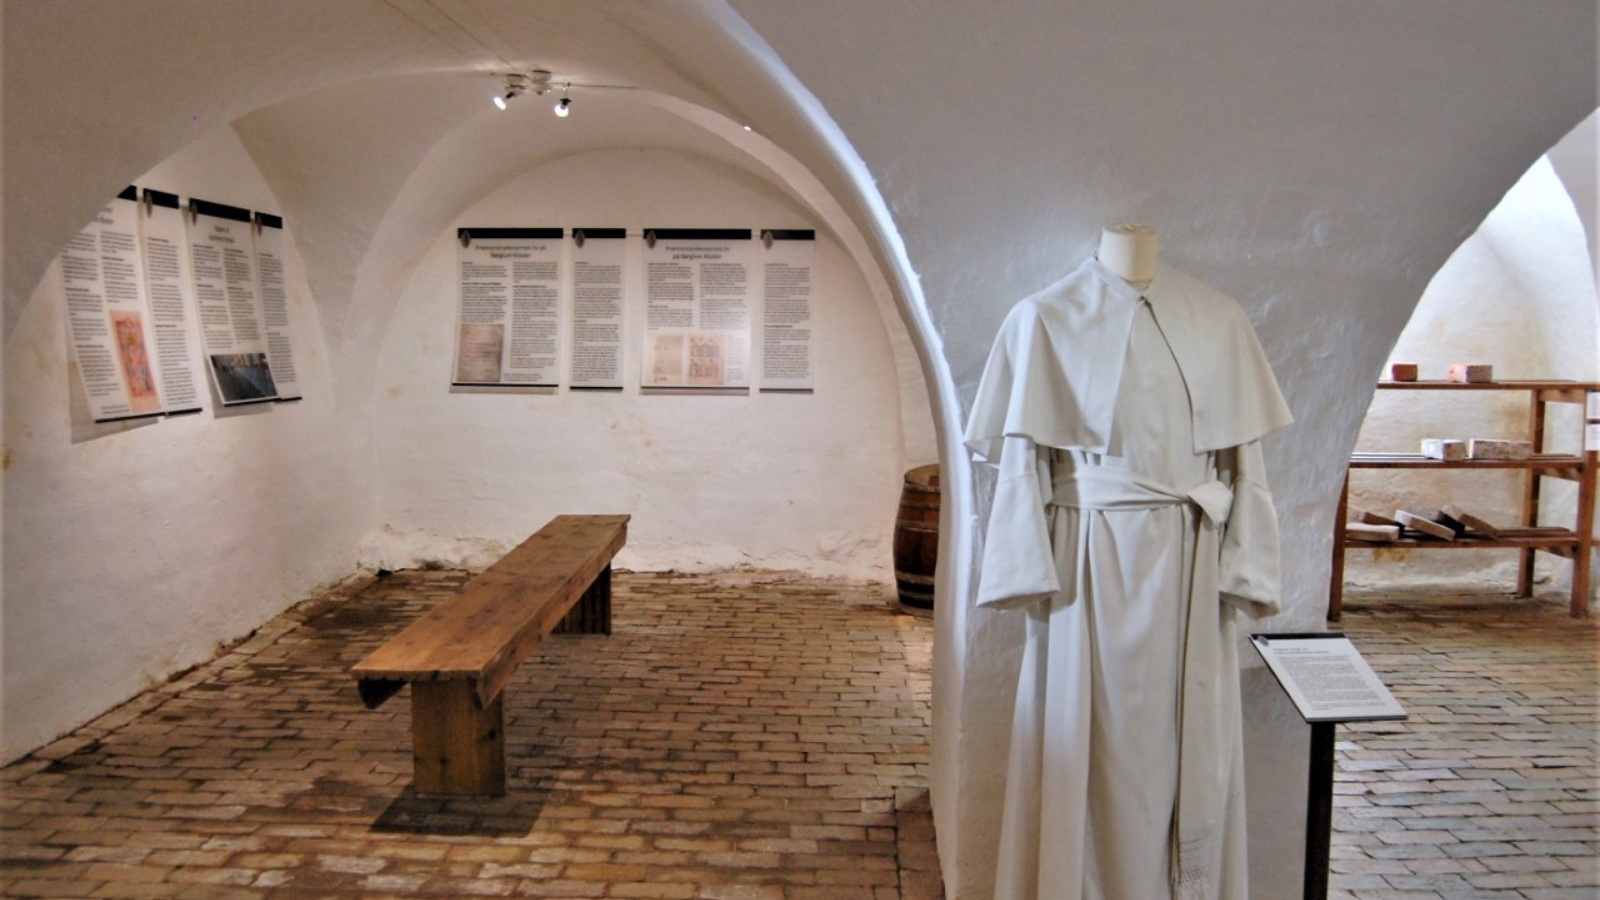 Børglum Kloster